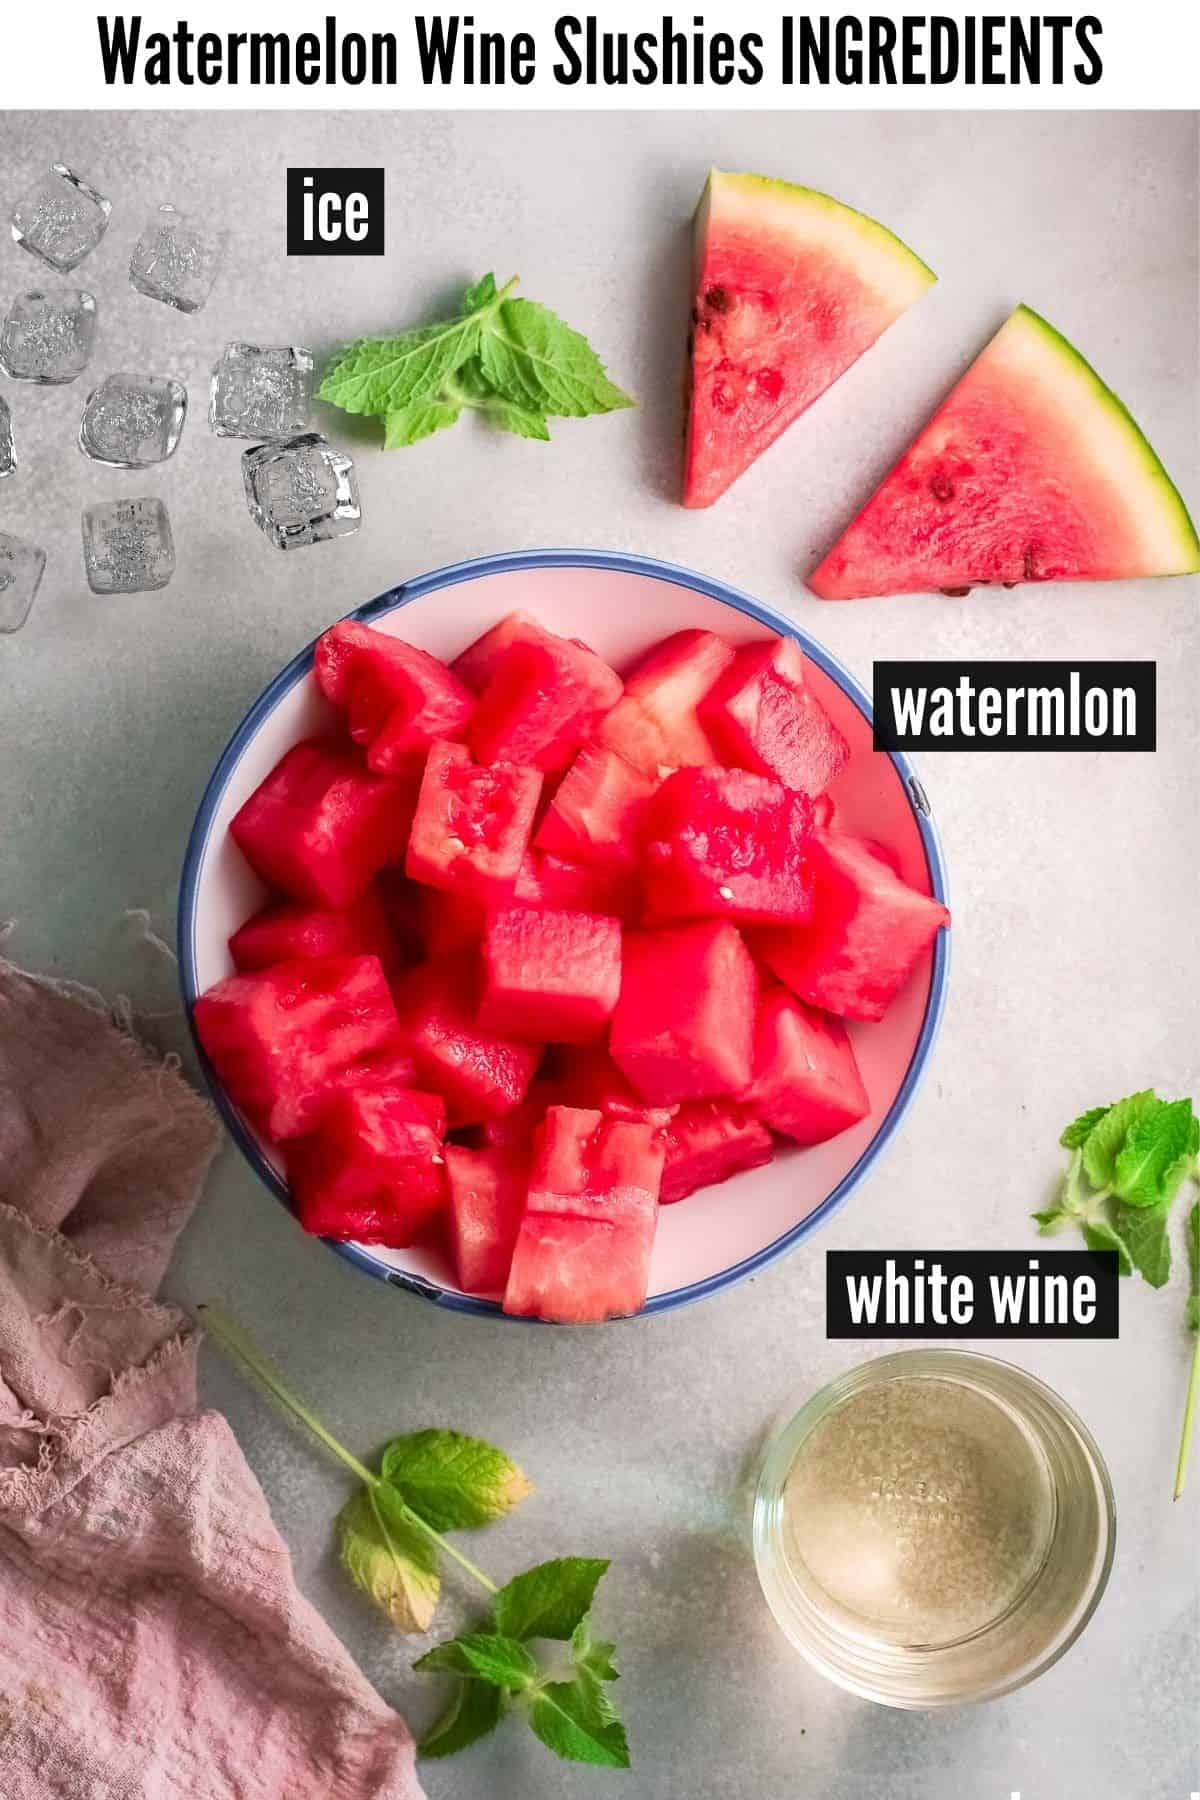 watermelon wine slushies labelled ingredients.